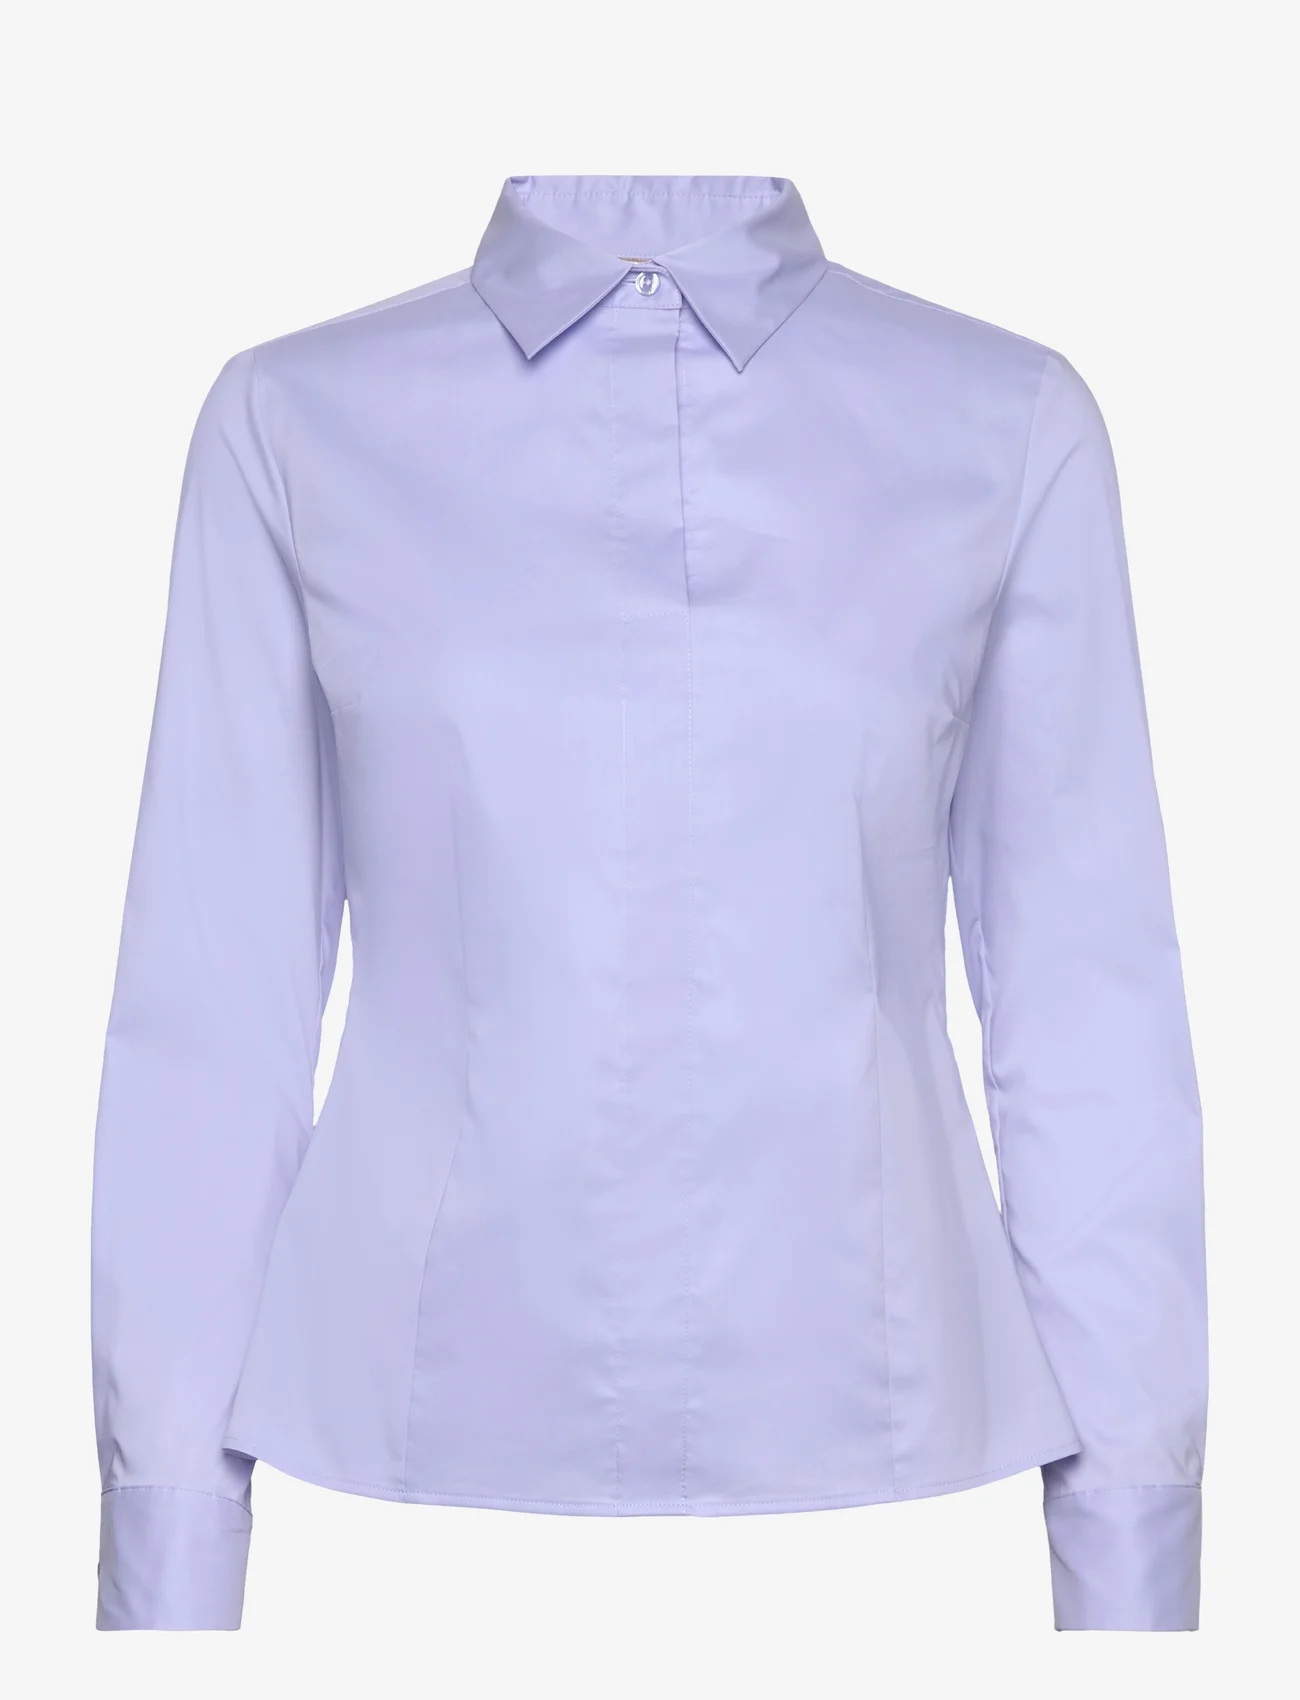 BOSS - Bashinah - long-sleeved shirts - light/pastel blue - 0